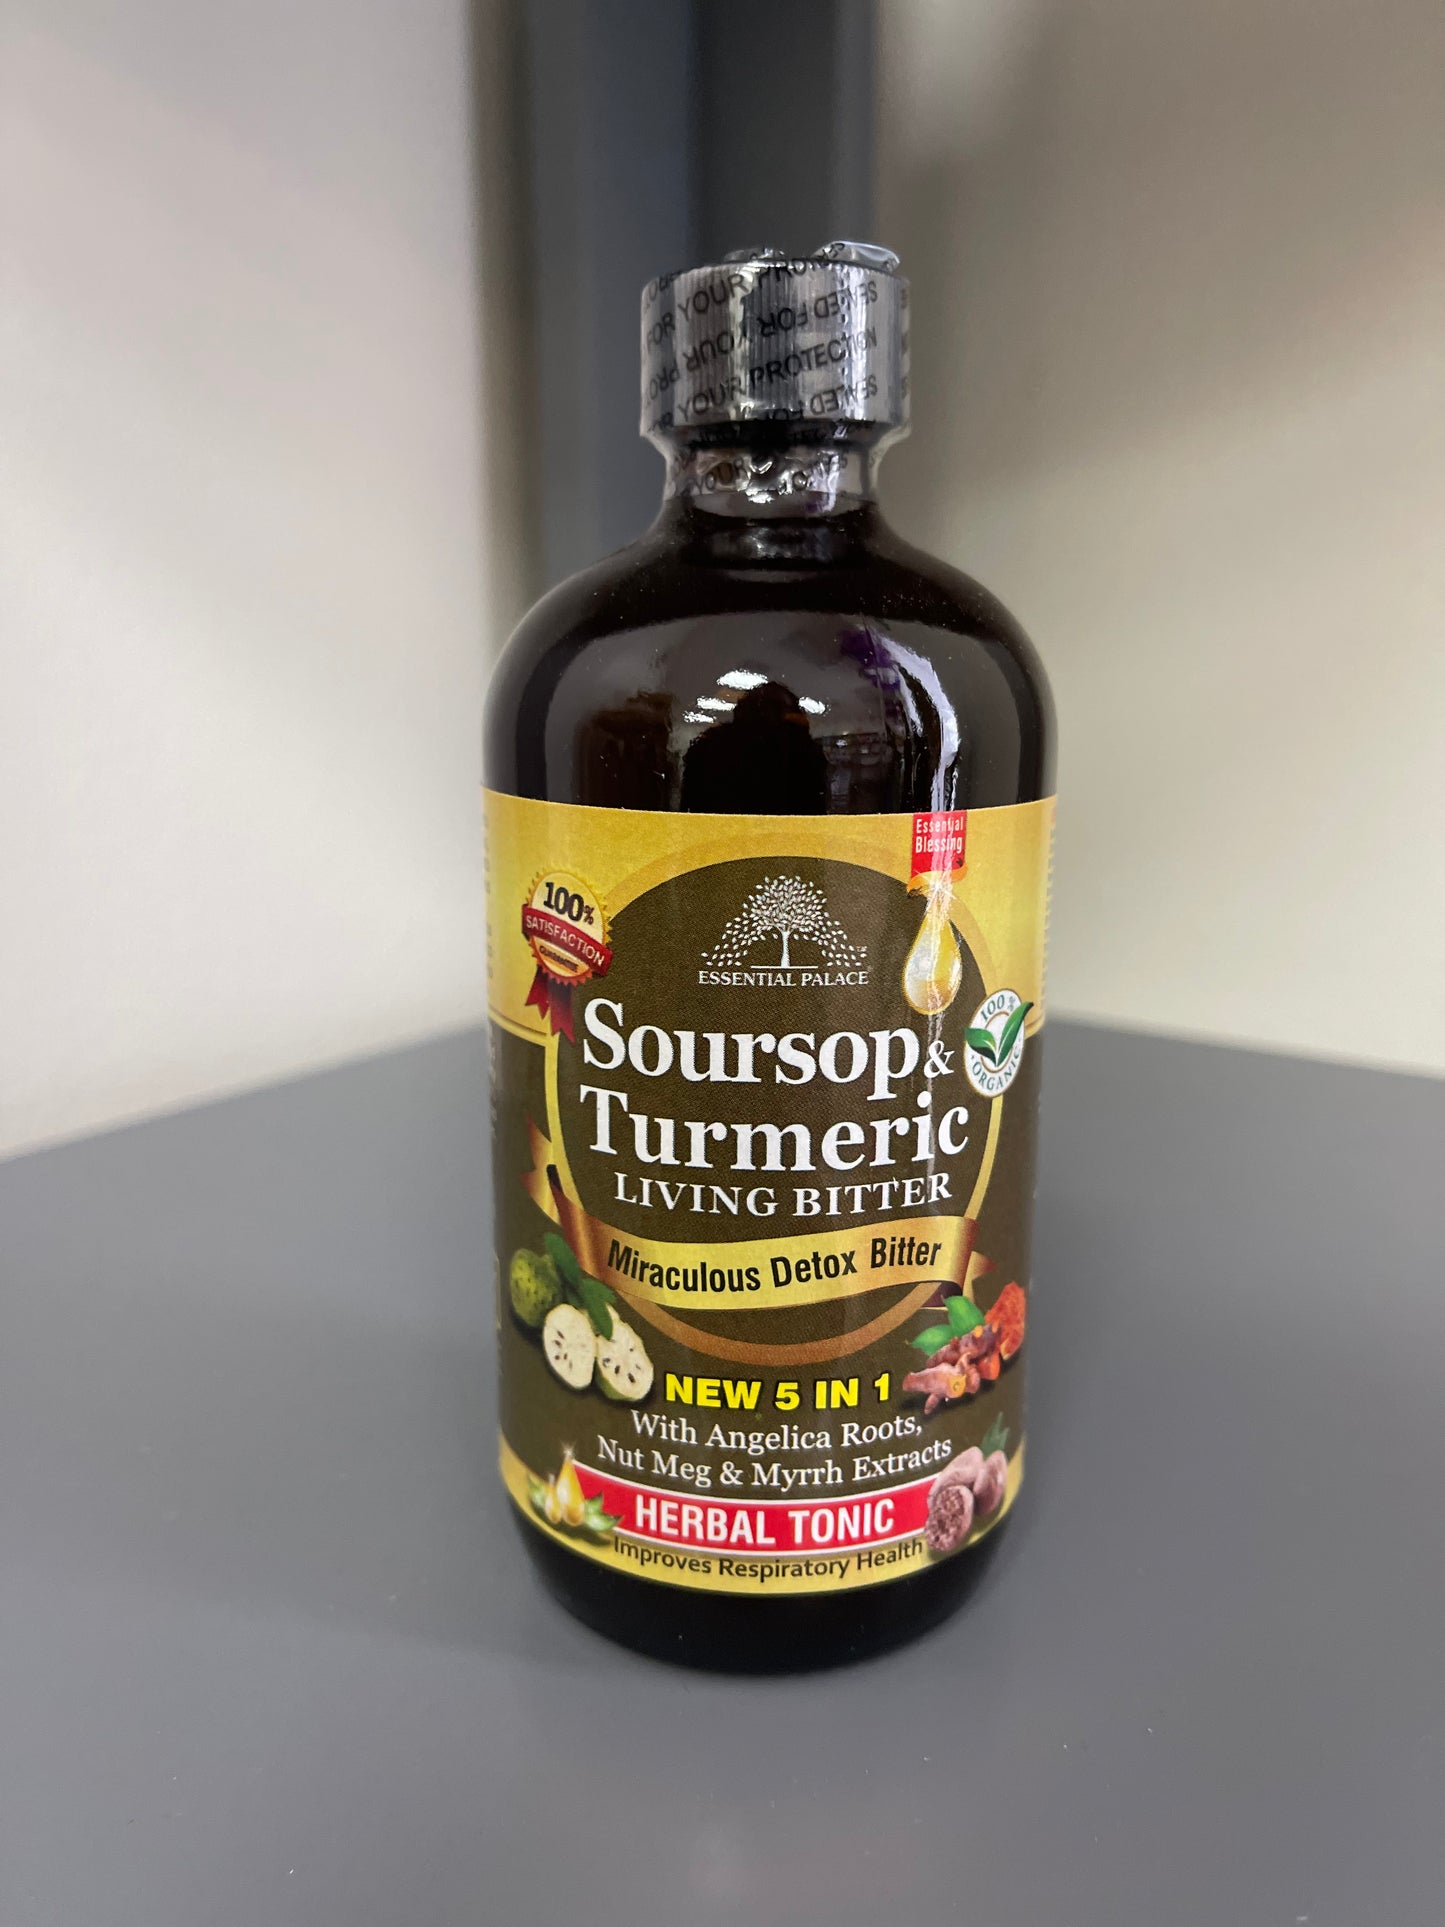 Soursop & Turmeric Bitters Detox